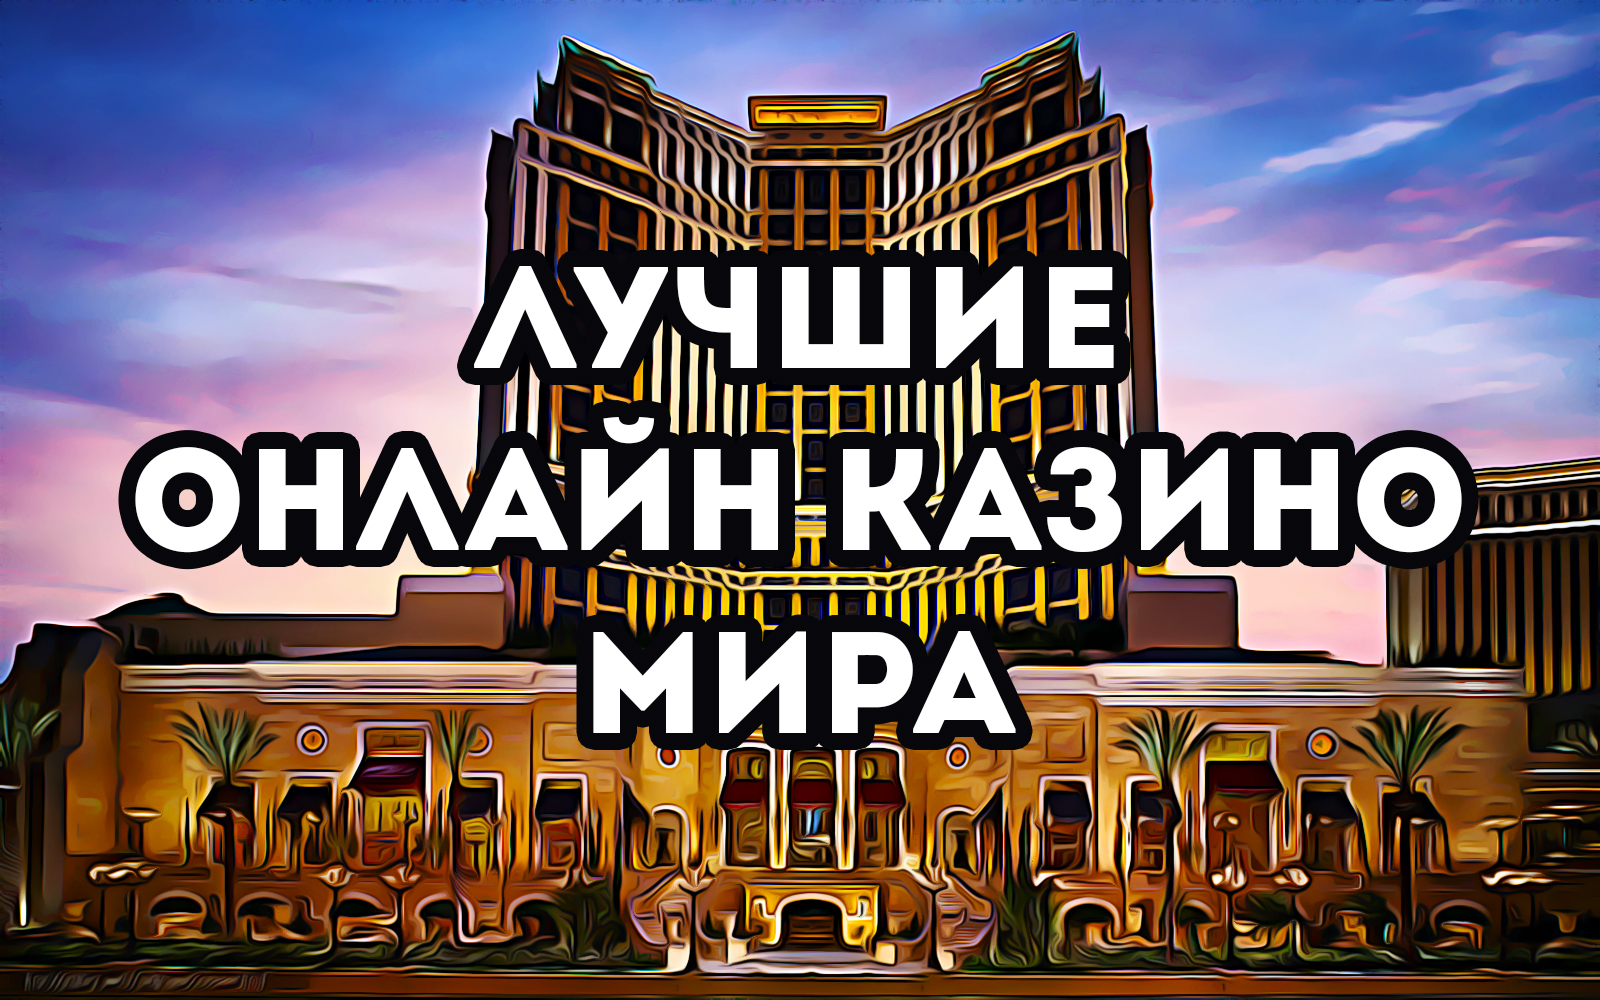 Париматч казино казахстан